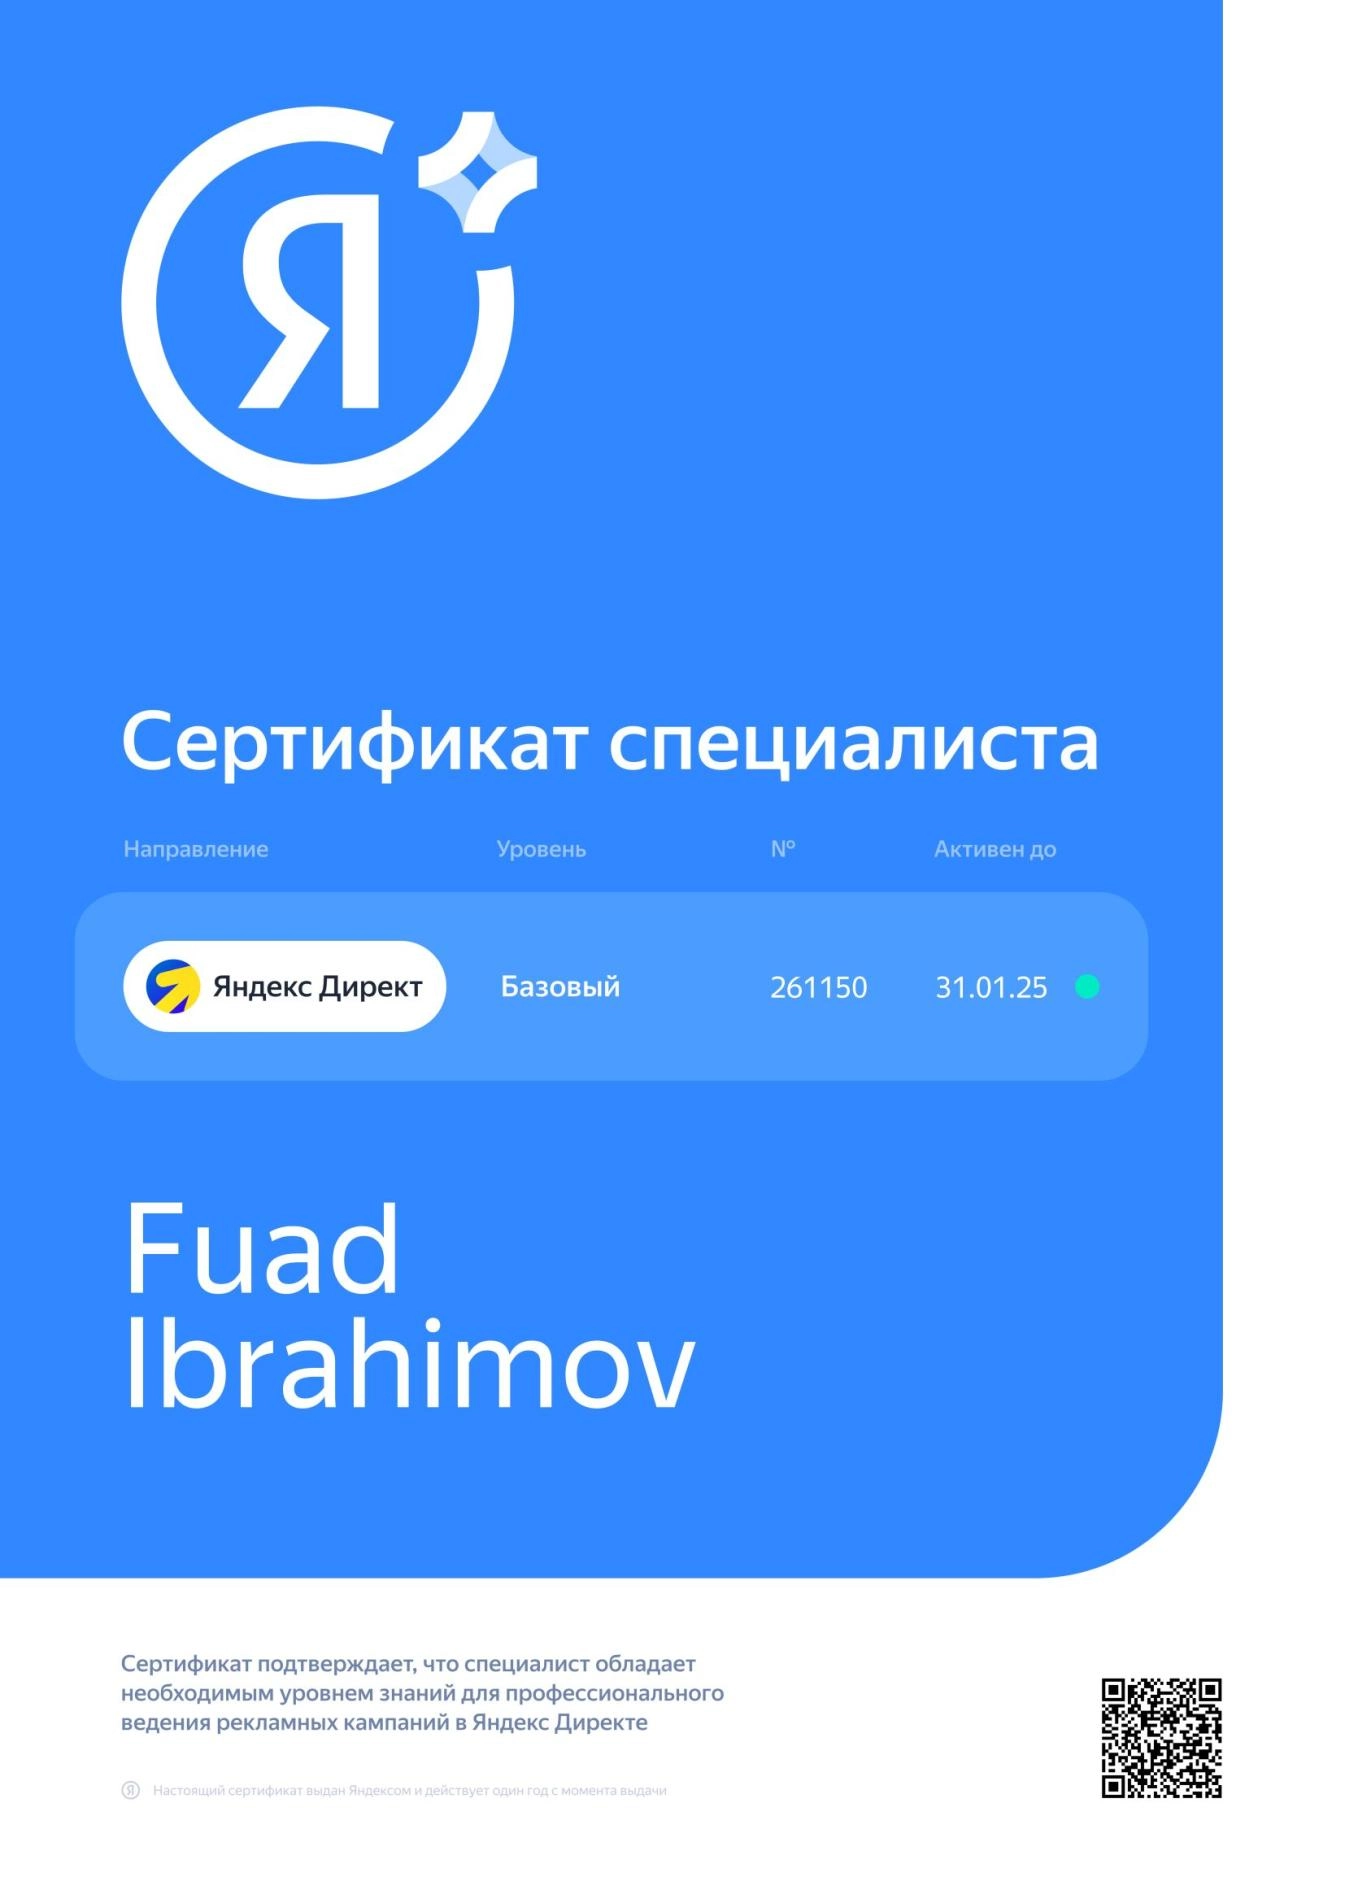 Сертификат специалиста Базовый. Яндекс Директ